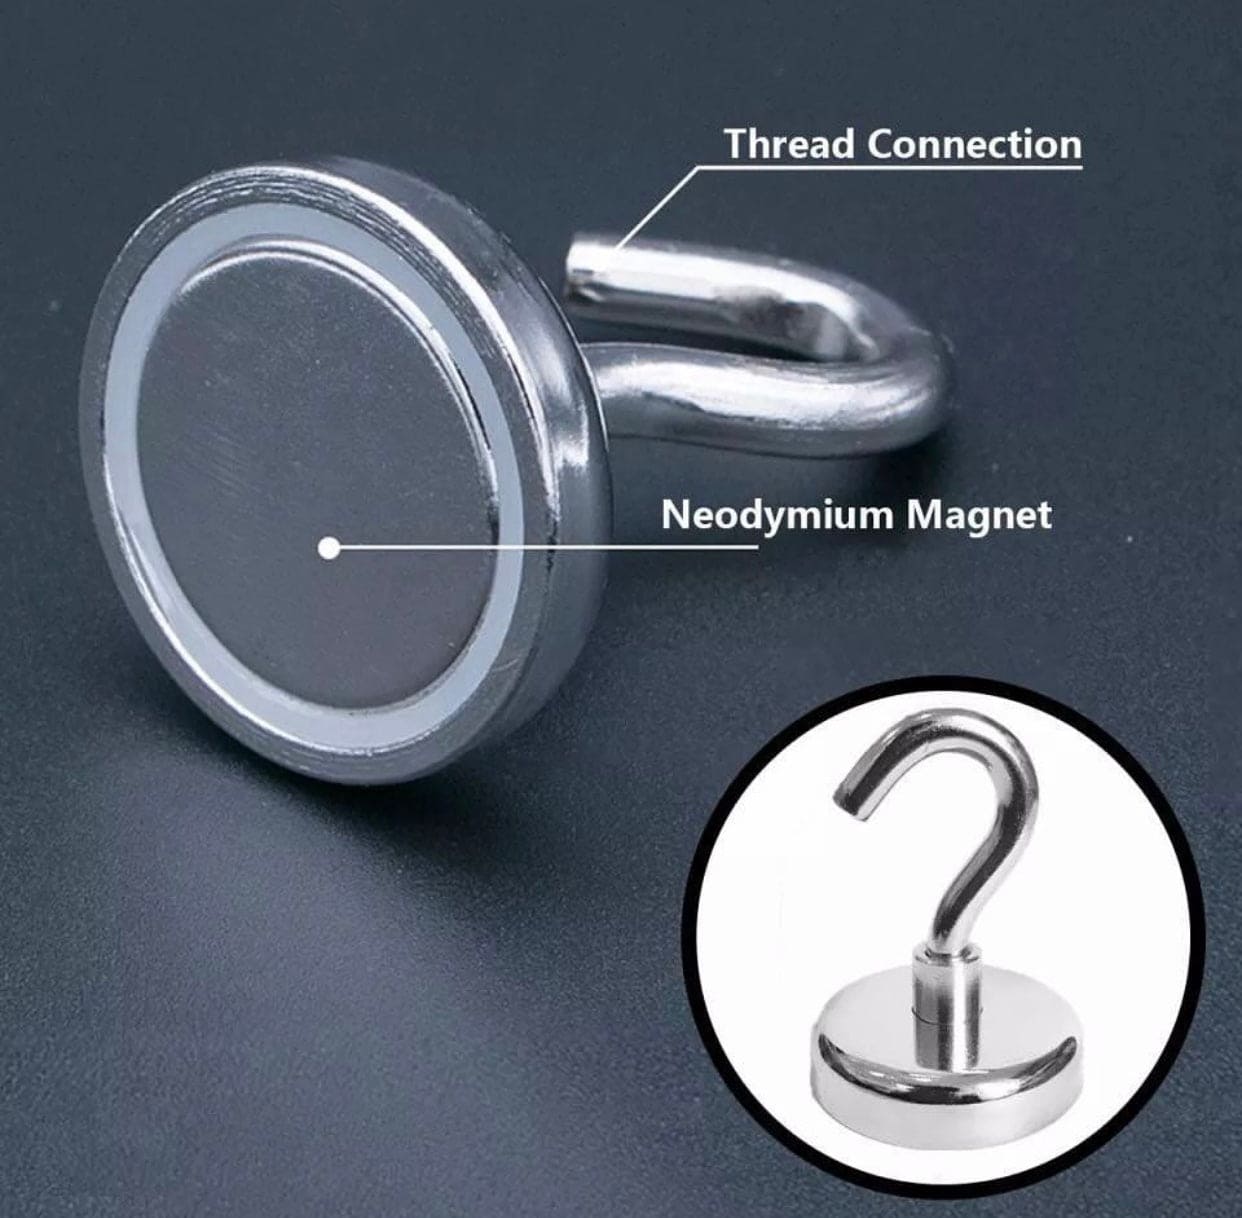 Heavy Duty Neodymium Powerful Magnet Hook, Towel Key Wall Strong Hanger, Rotatable Sheep Eye Magnet Hook